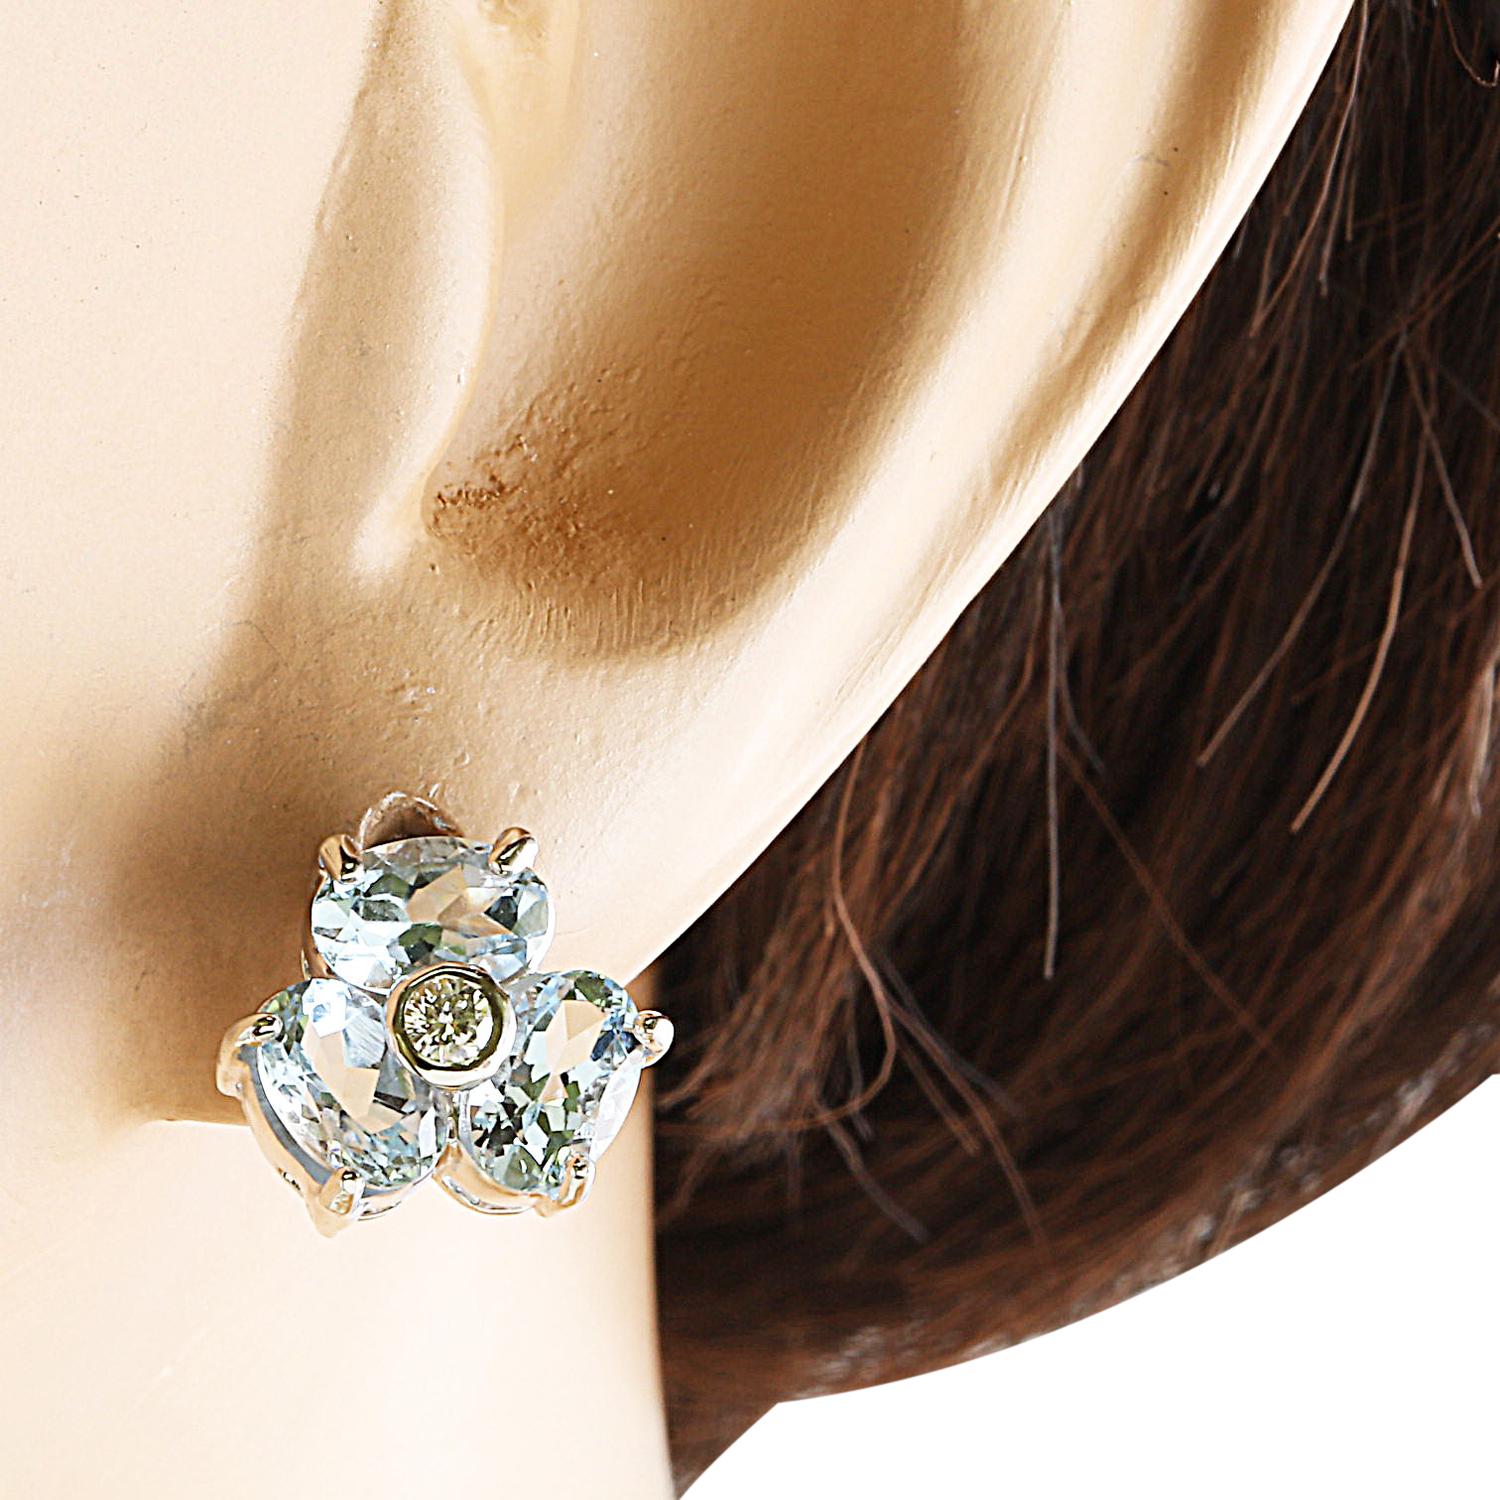 Modern Exquisite Natural Aquamarine Diamond Earrings in 14K White Gold